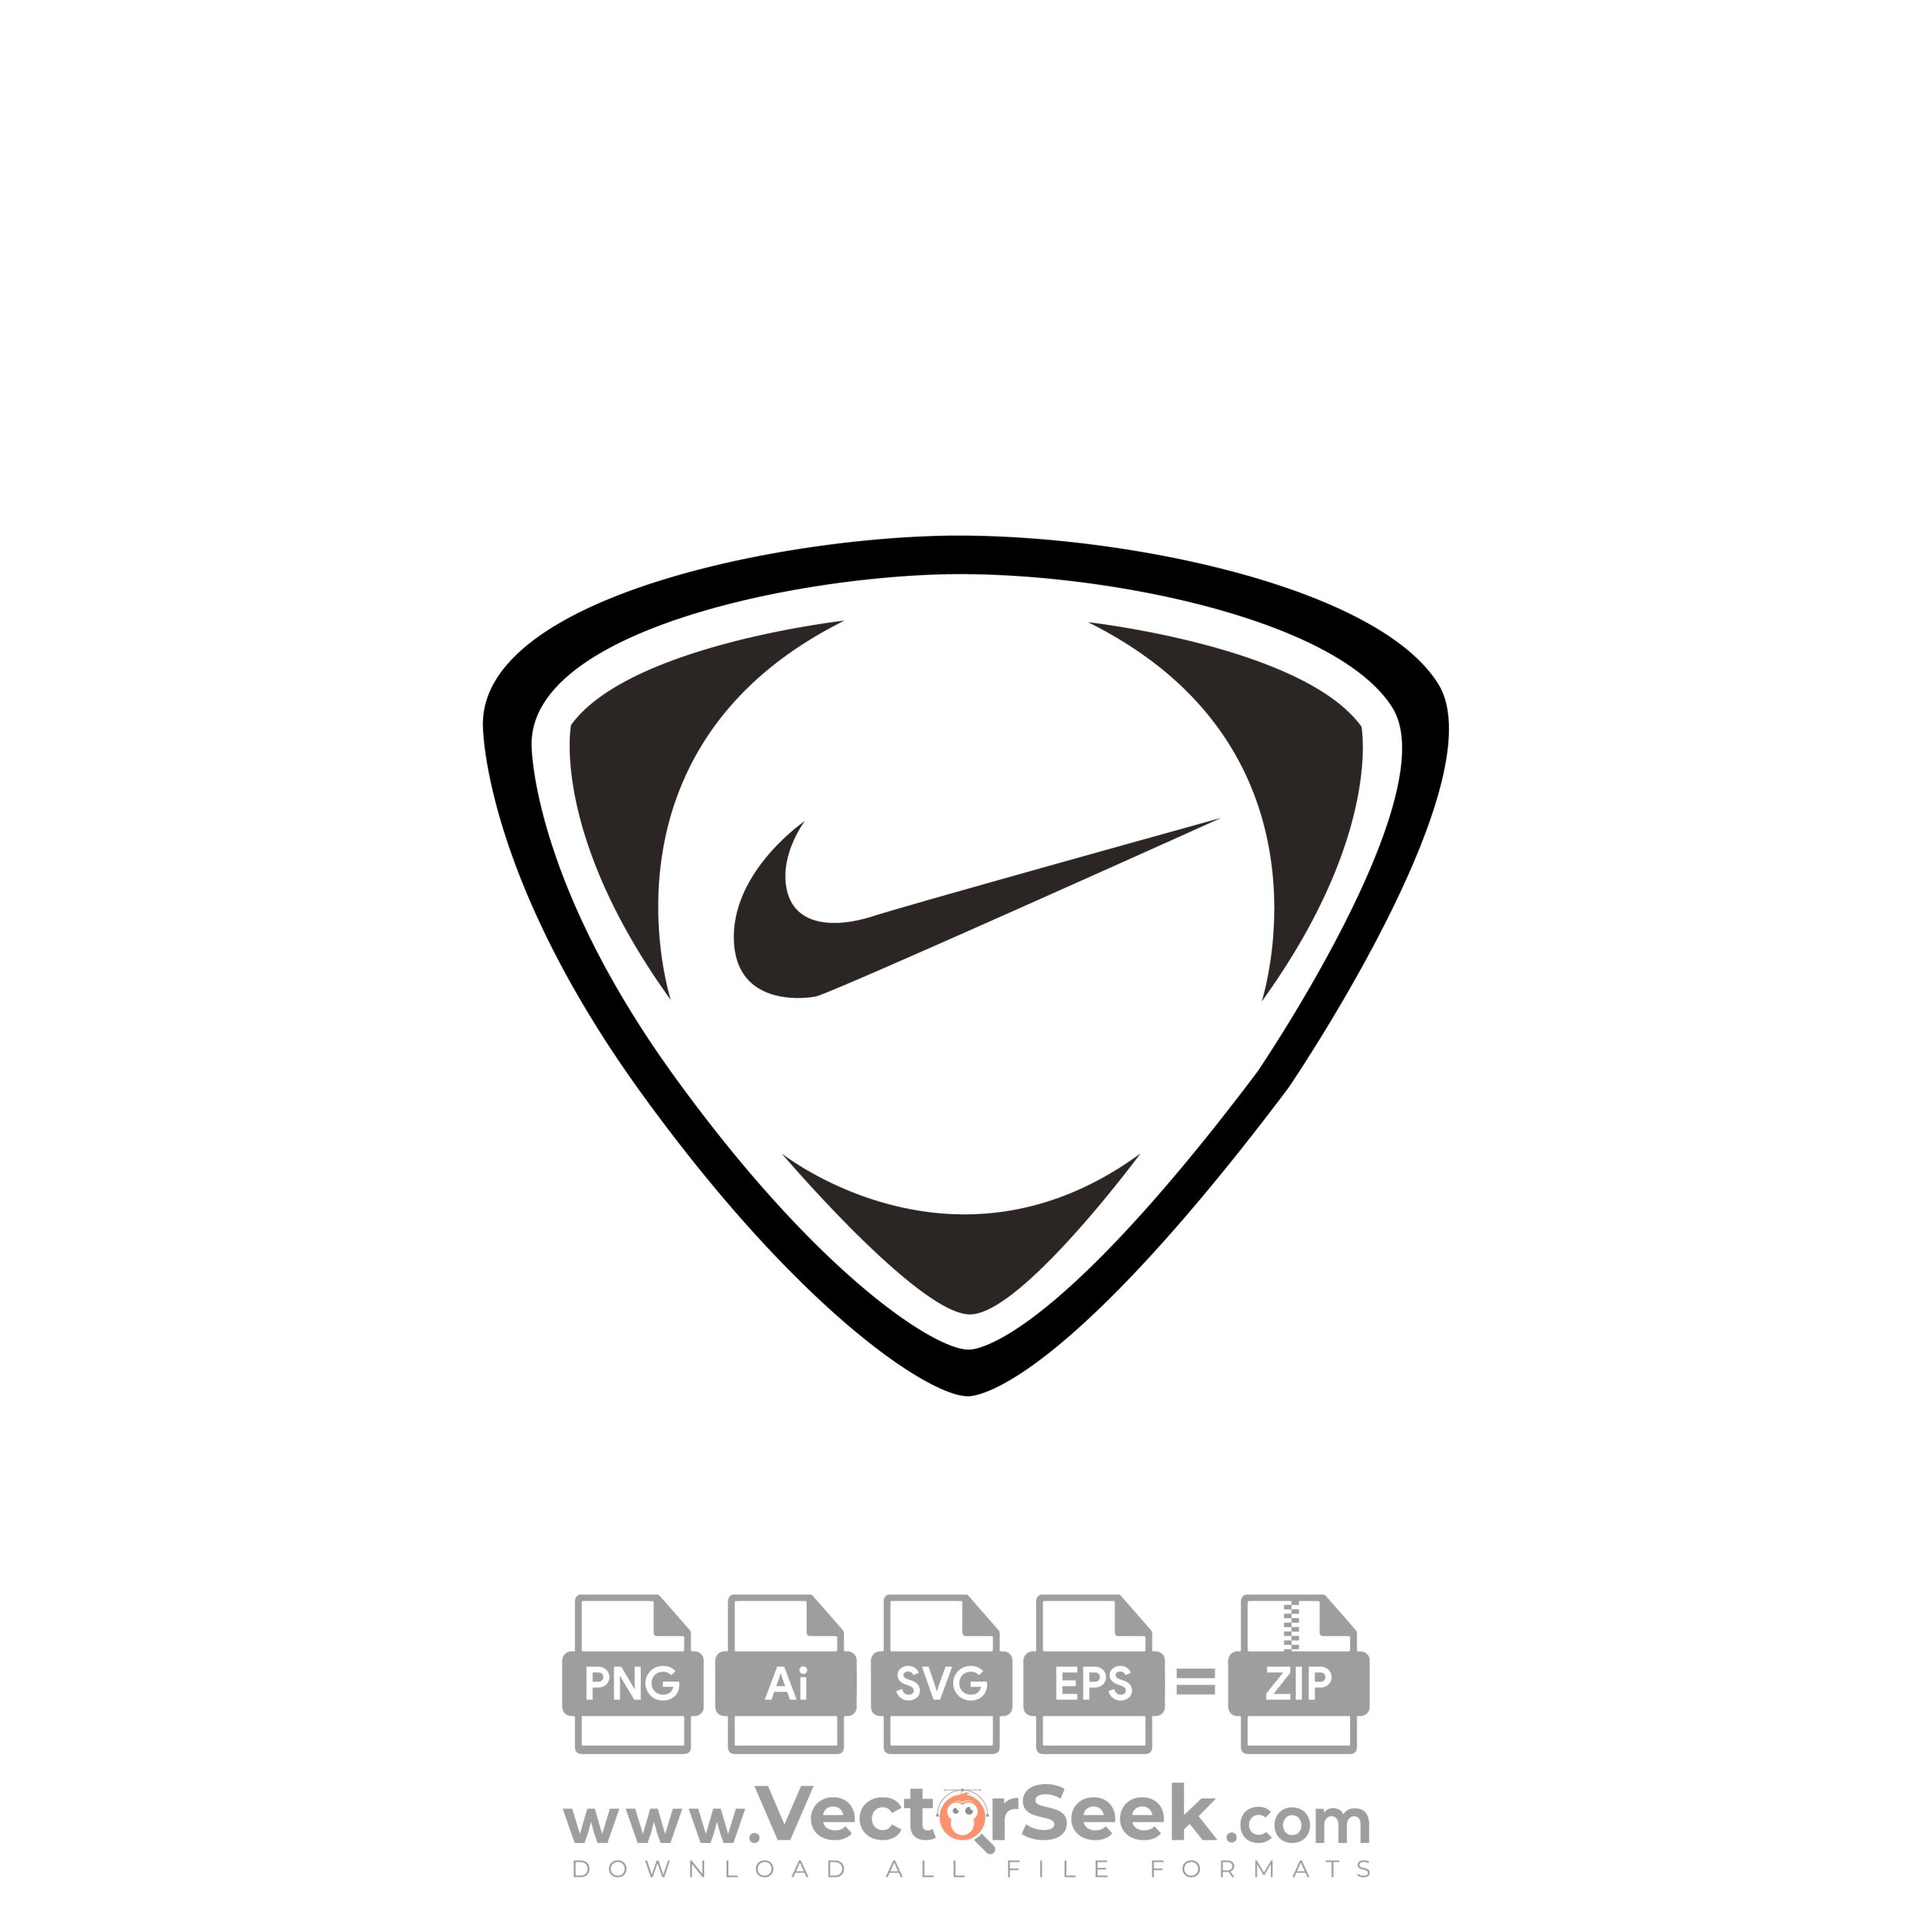 Tío o señor Víspera Aventurarse Nike Swoosh White Logo Vector - (.Ai .PNG .SVG .EPS Free Download)